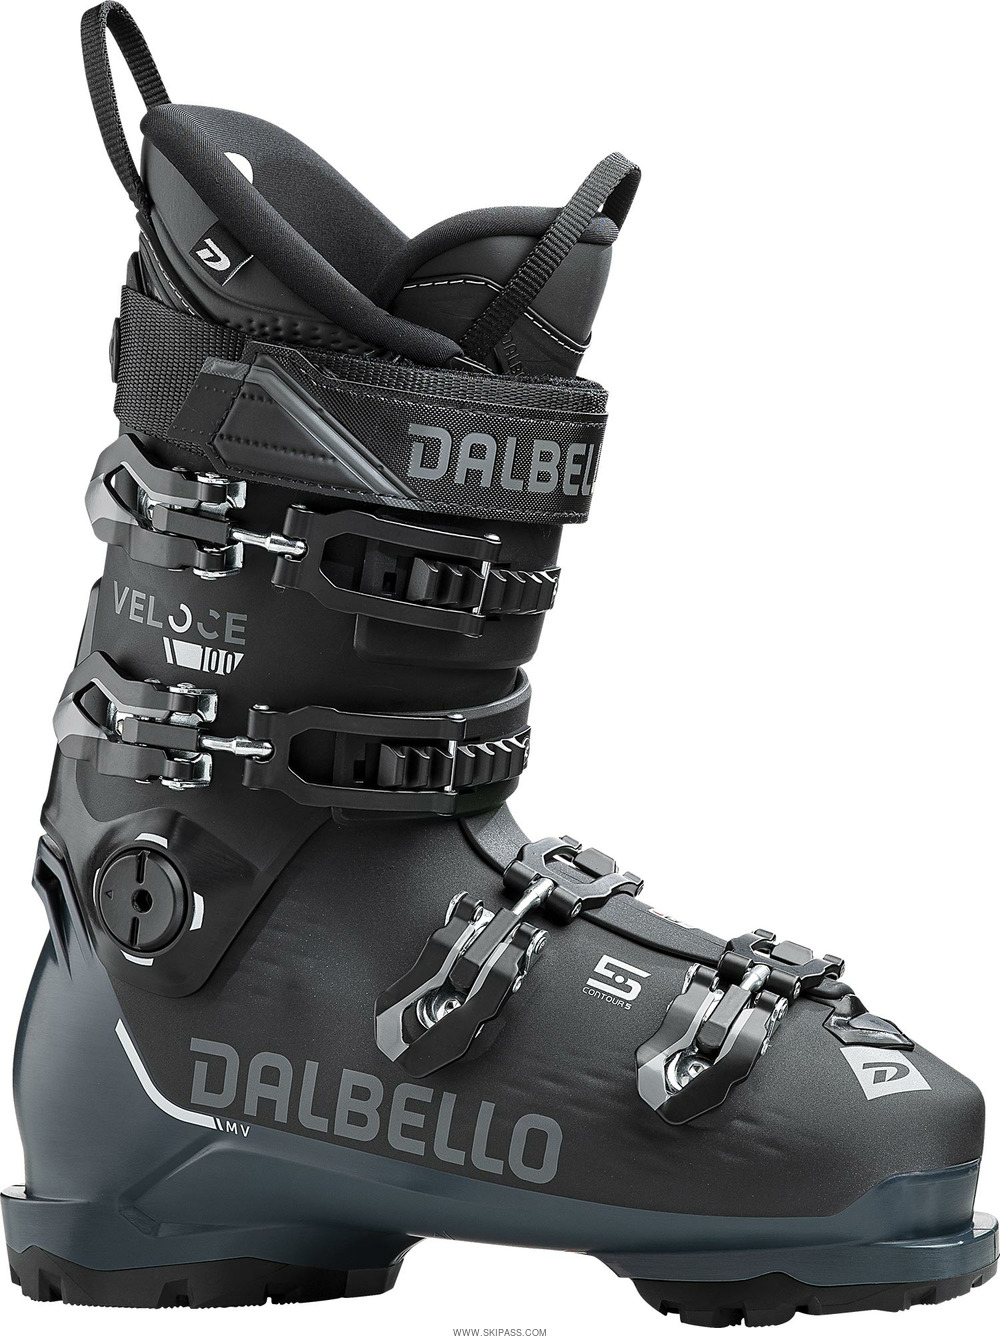 Dalbello Veloce 100 gw black/black